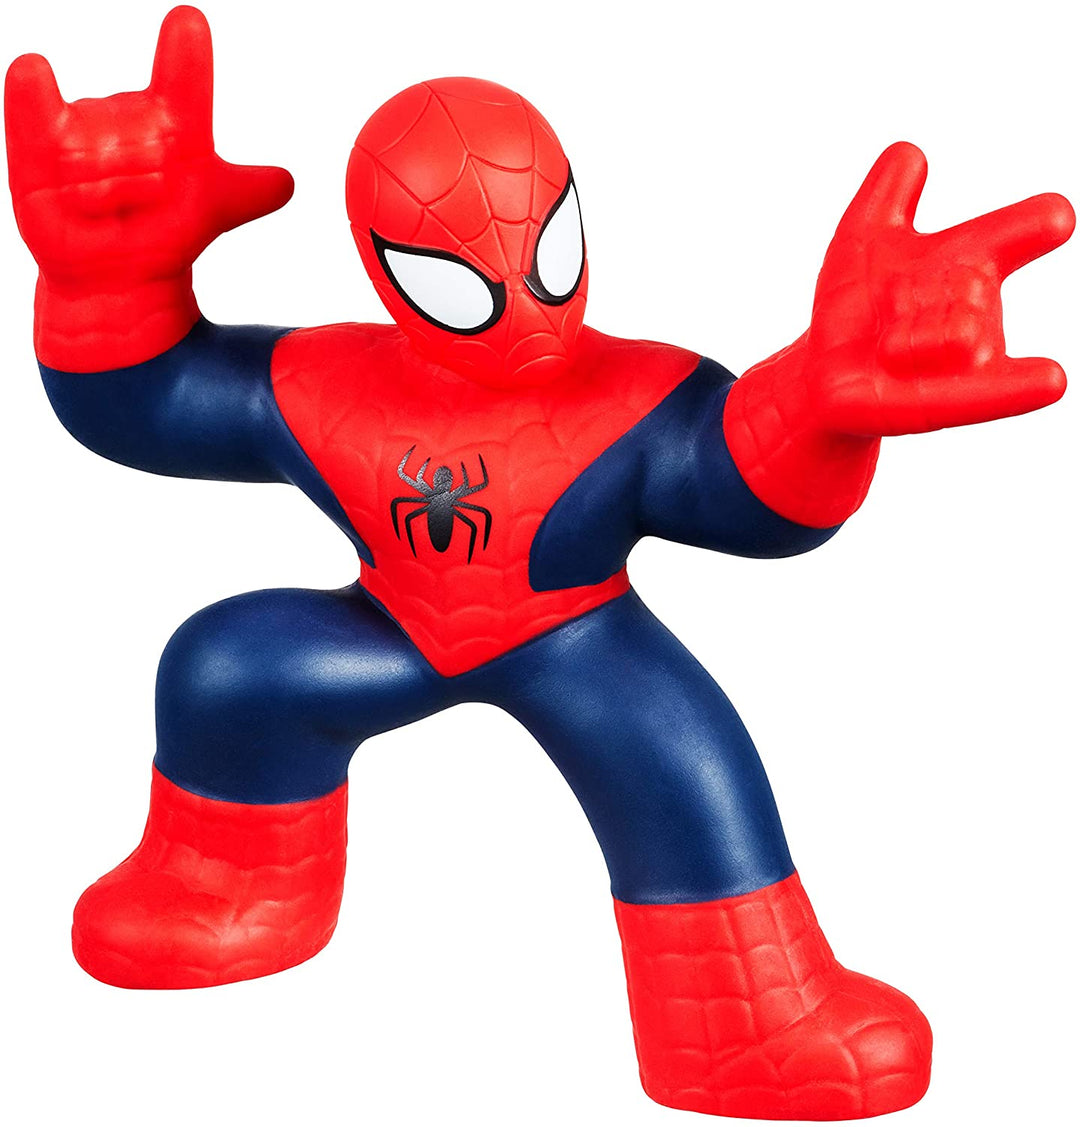 Marvel Heroes de Goo Jit Zu Spiderman